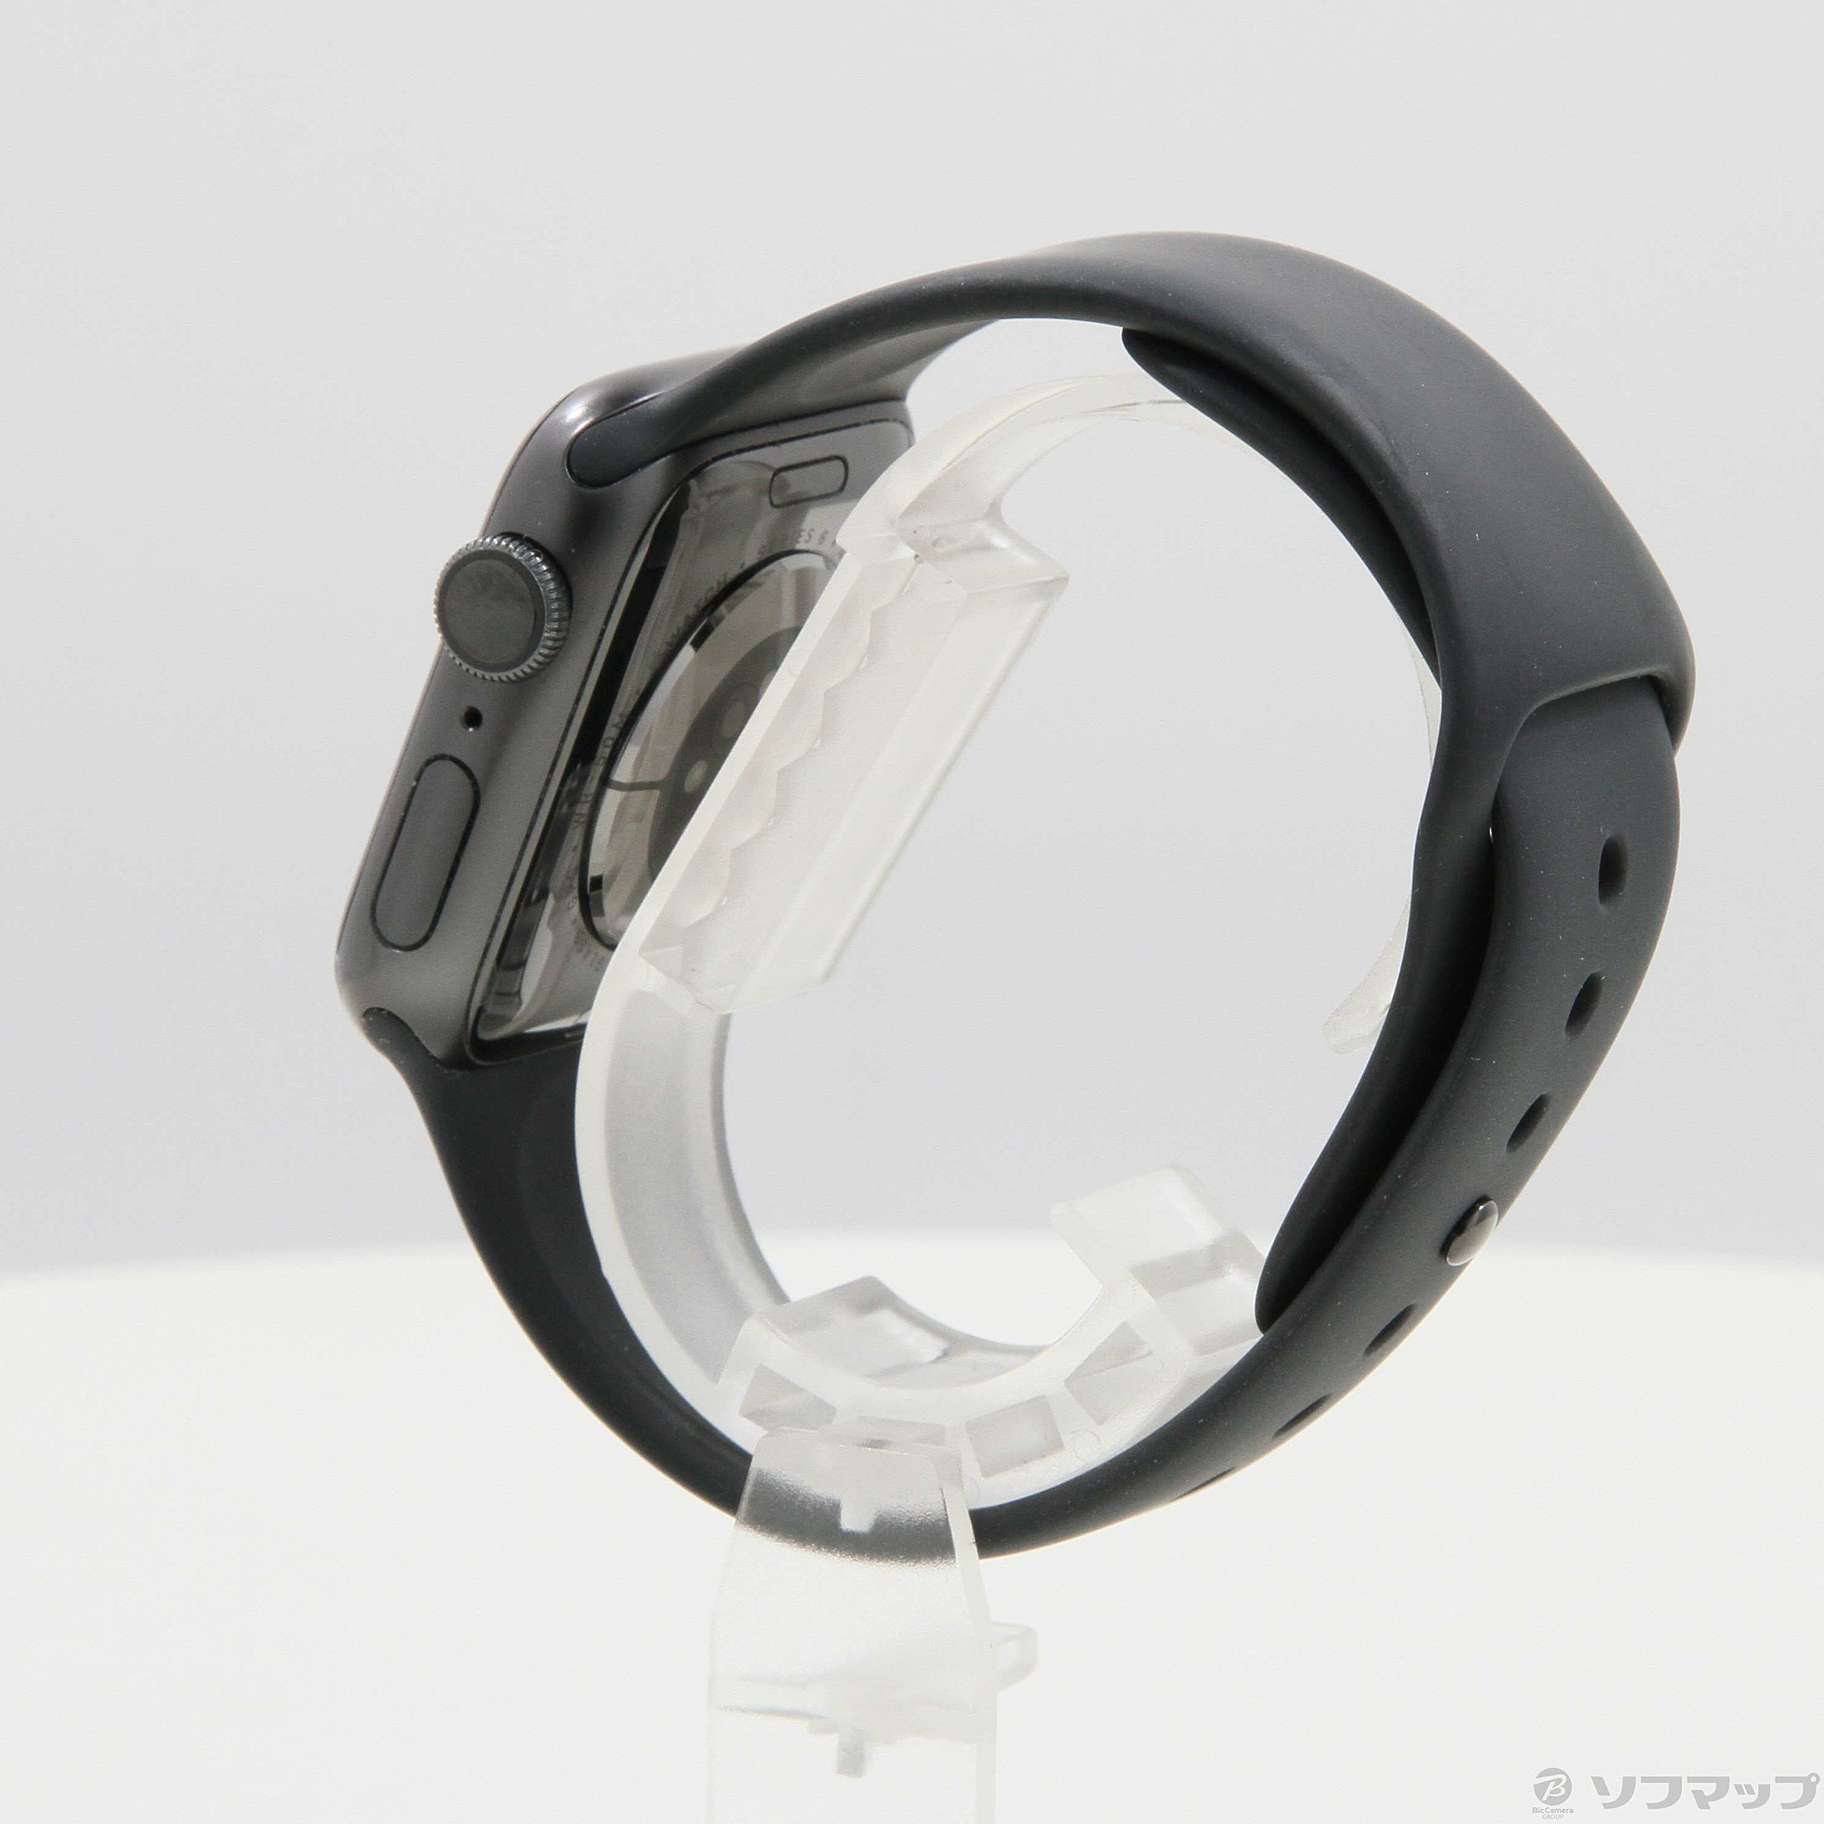 Apple Watch Series 6 GPS 40mm スペースグレイアルミニウムケース ブラックスポーツバンド